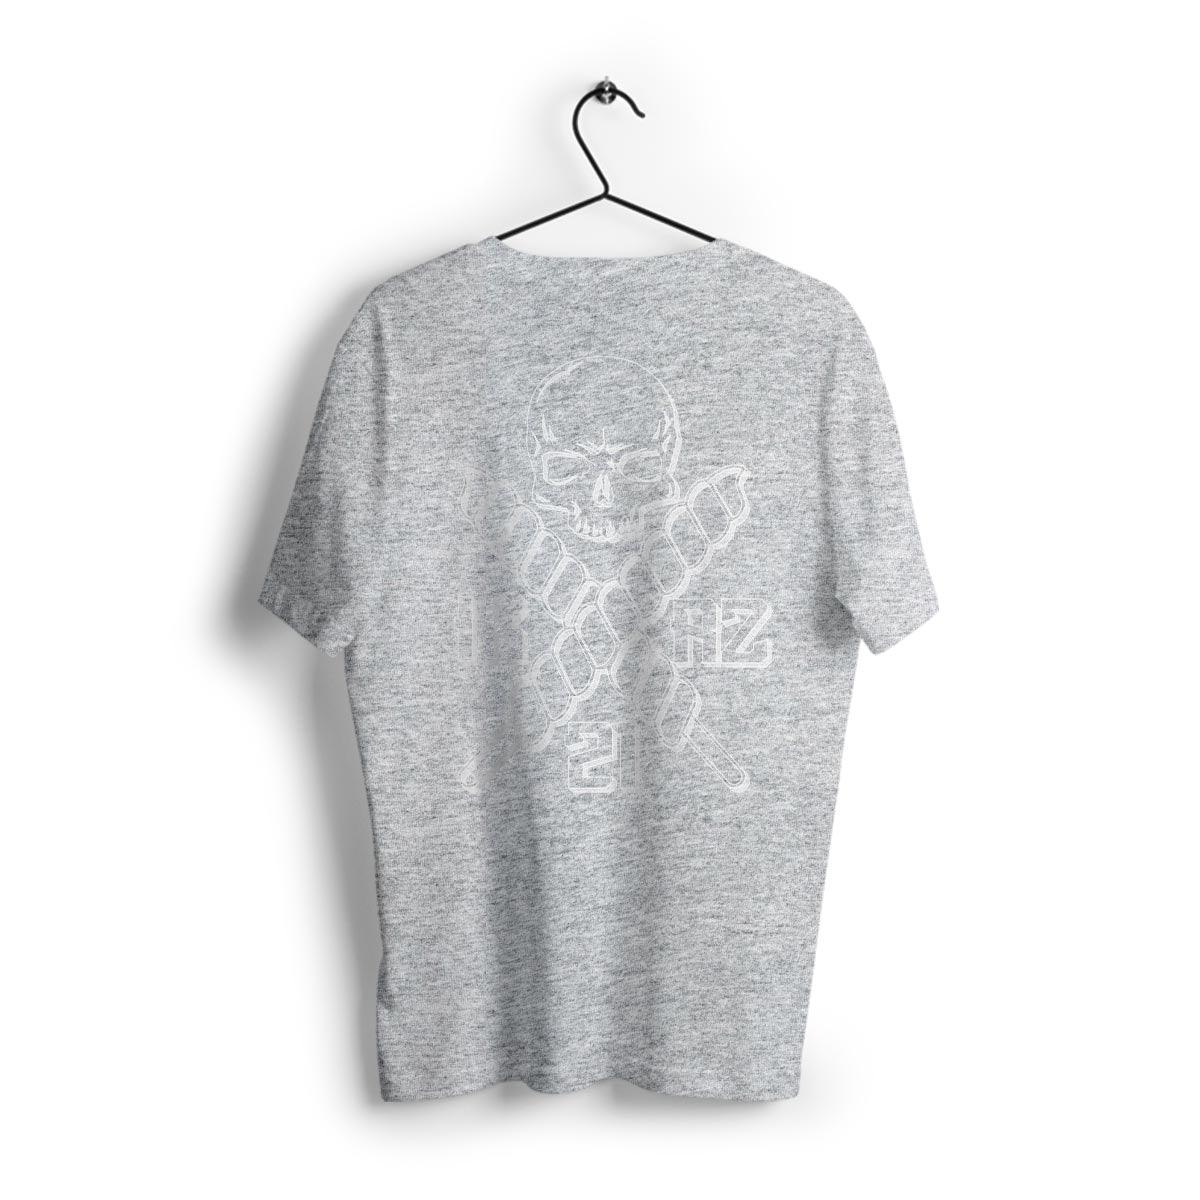 Ikrz | Lutscher | Grey Shirt - Ikaruz